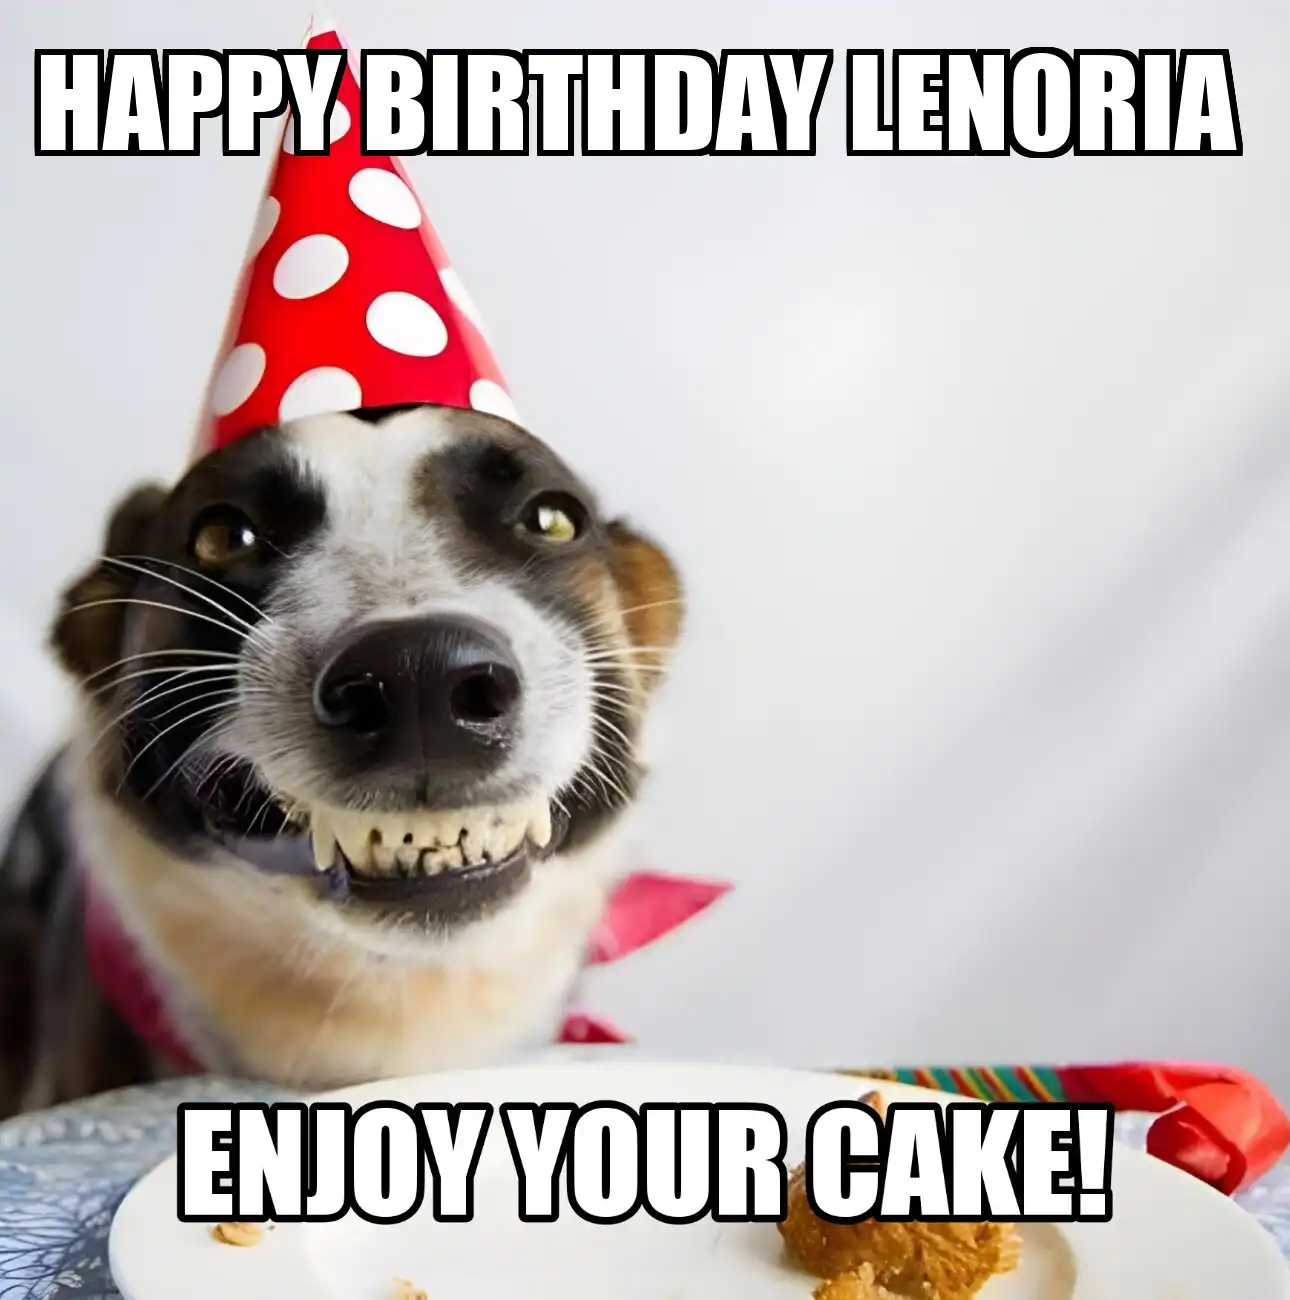 Happy Birthday Lenoria Enjoy Your Cake Dog Meme